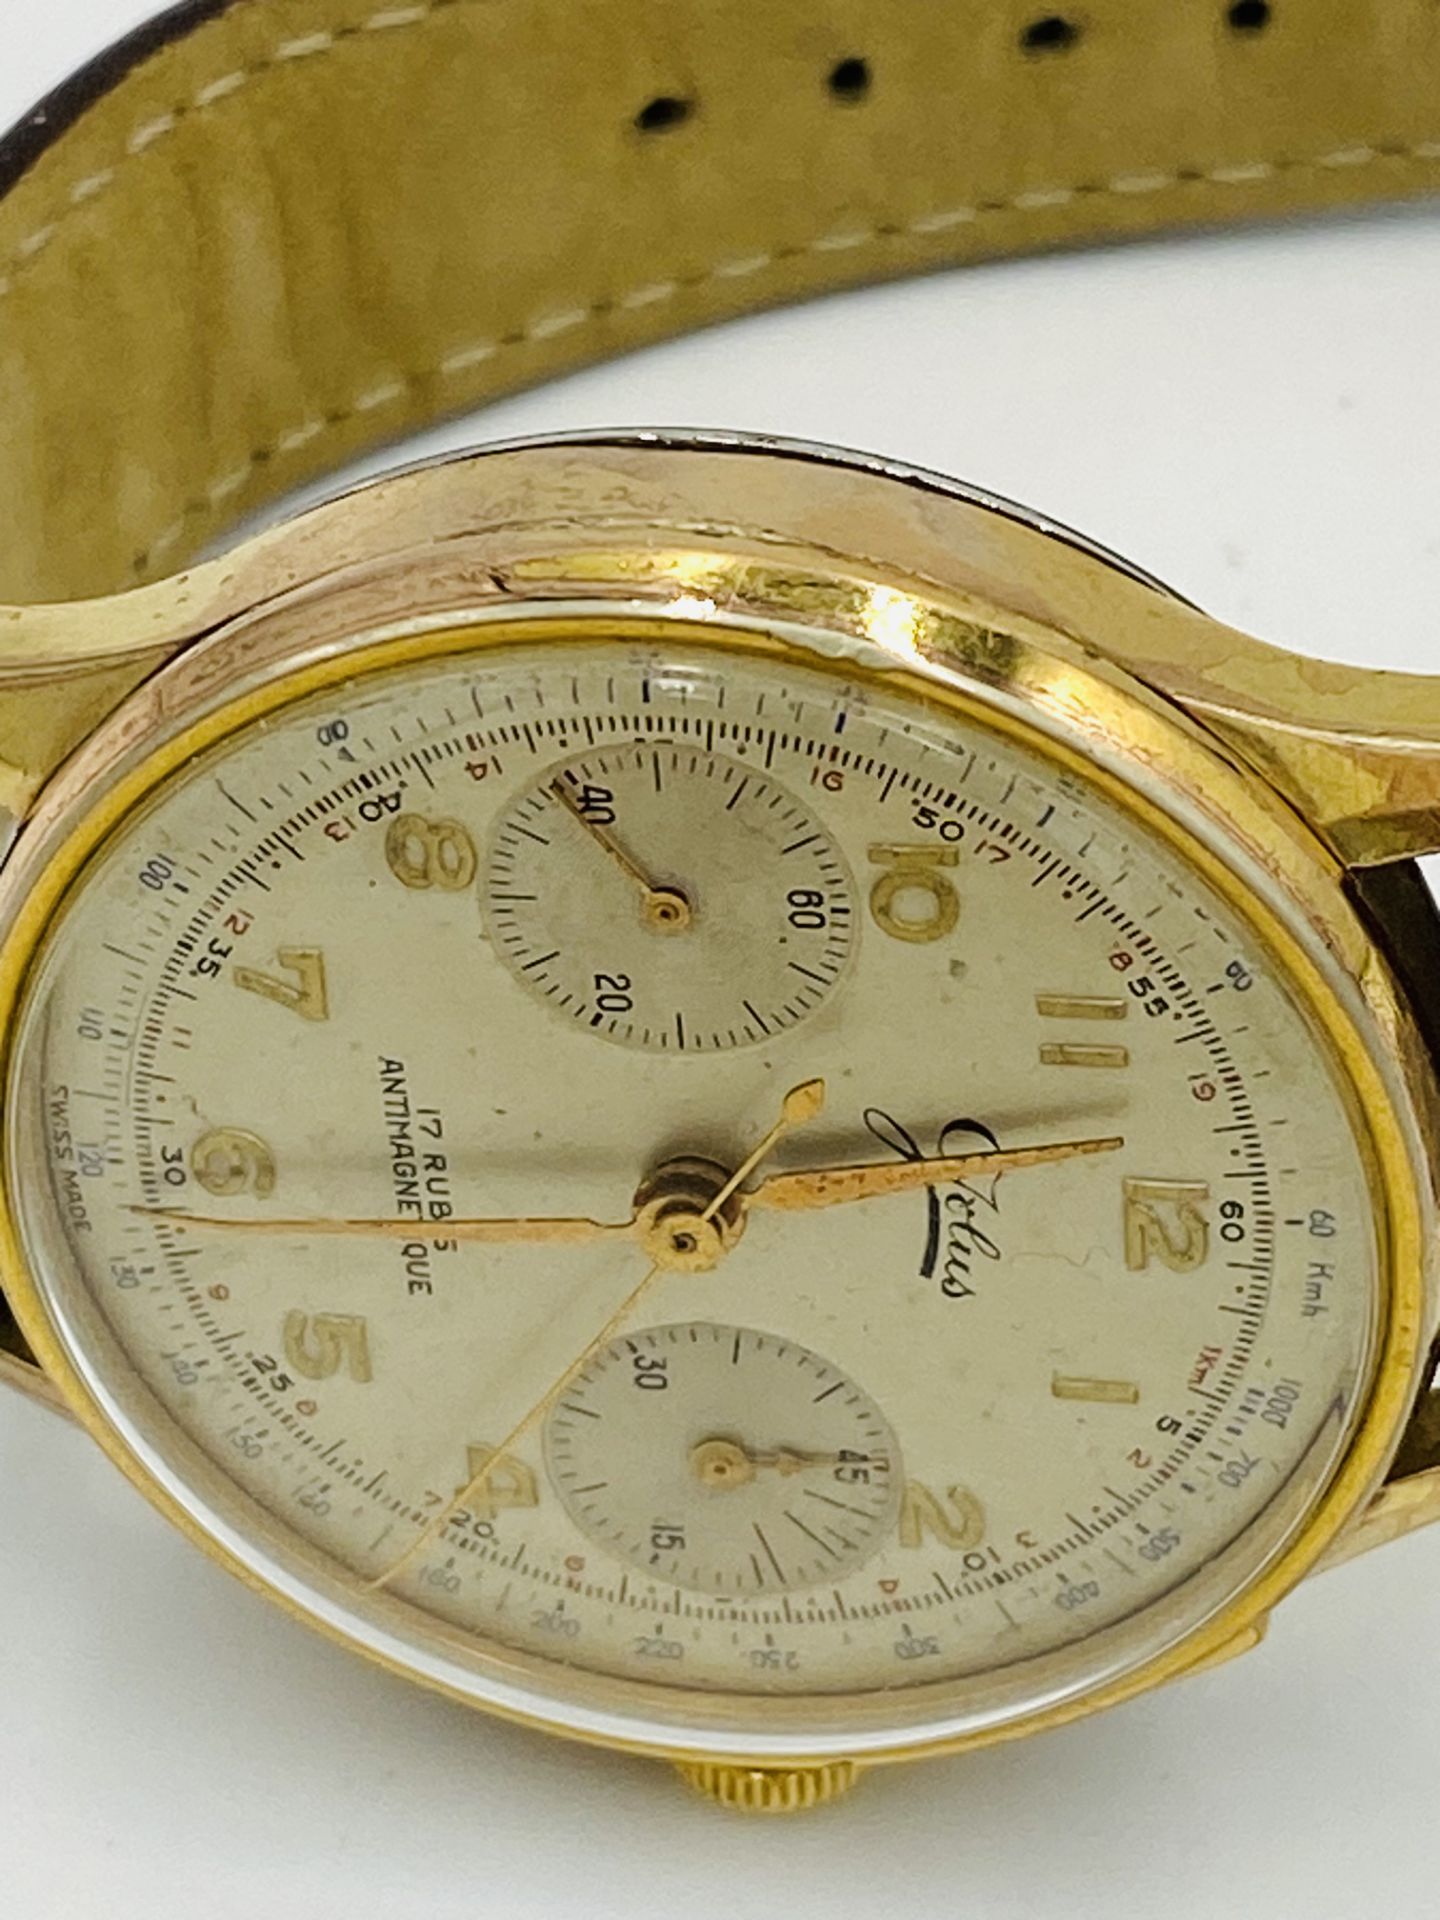 Jolus gents chronograph wrist watch - Image 7 of 8